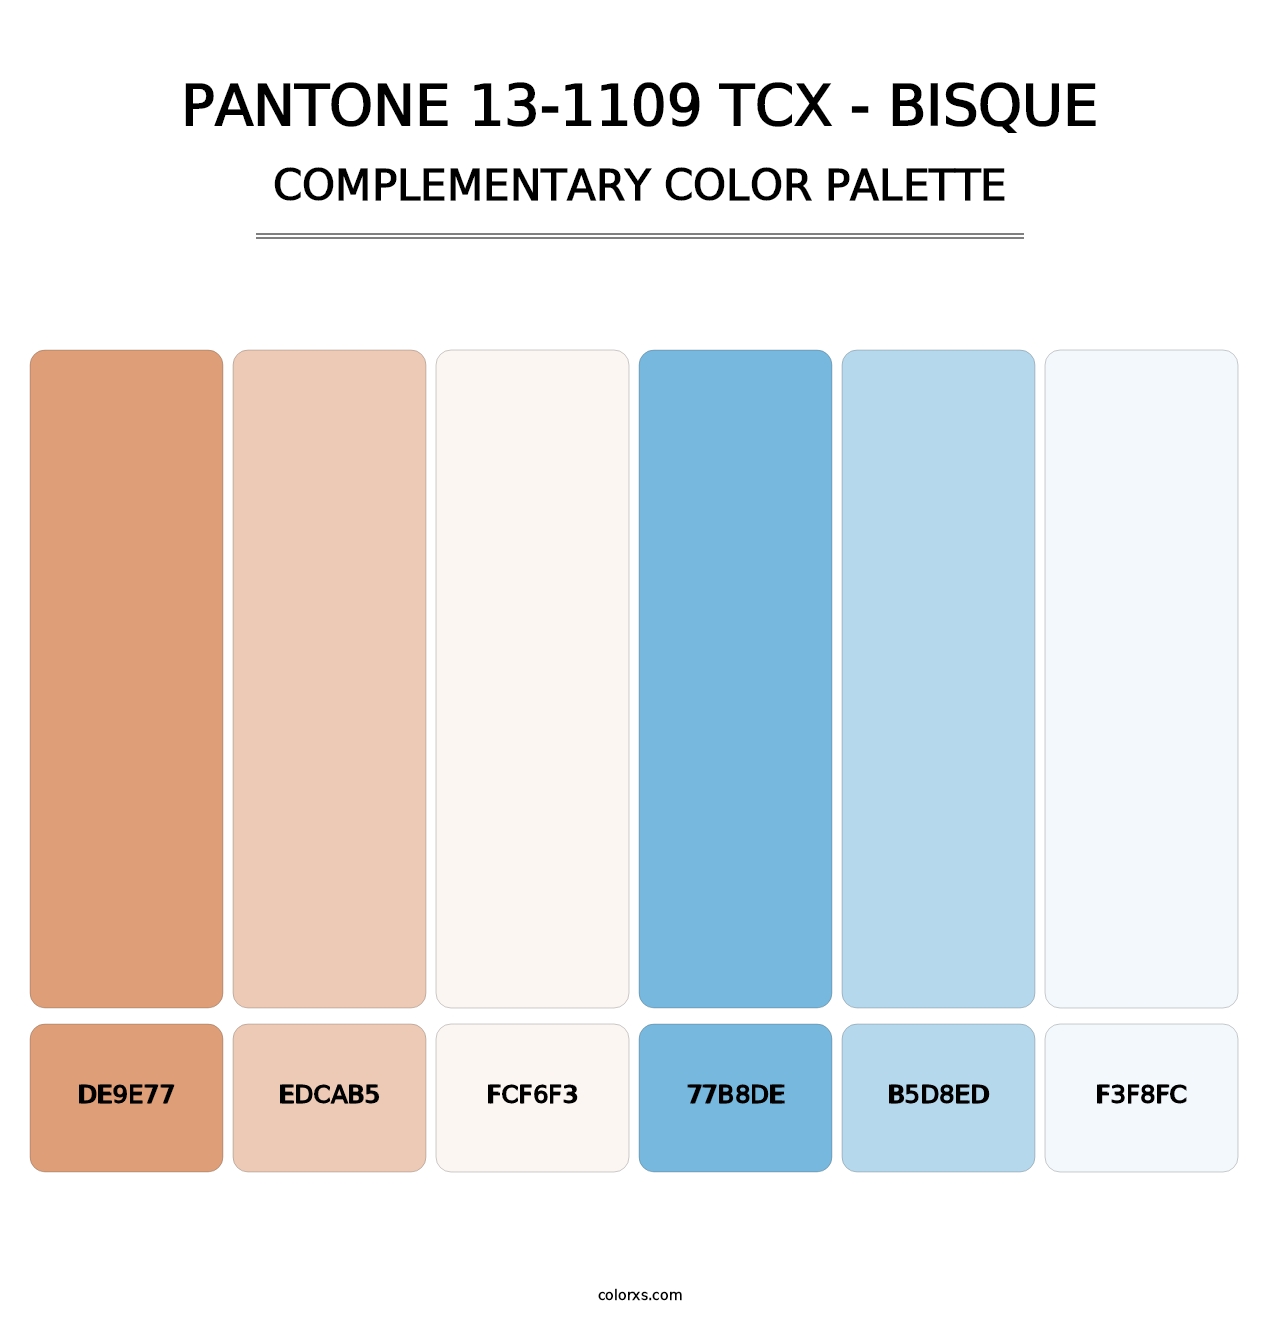 PANTONE 13-1109 TCX - Bisque - Complementary Color Palette